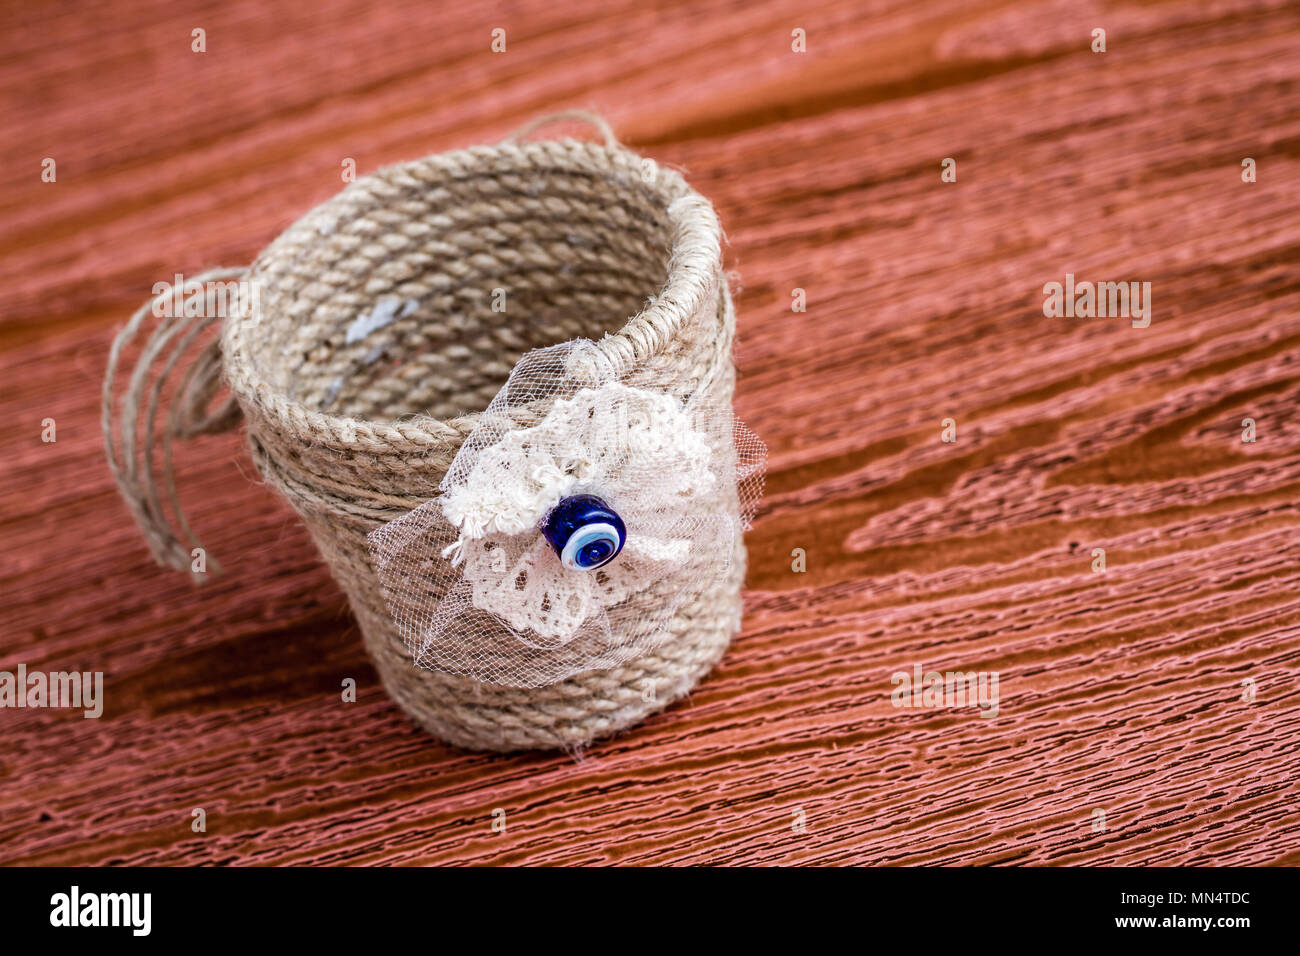 Handmade dekoratif basket made of thick jute rope on wooden